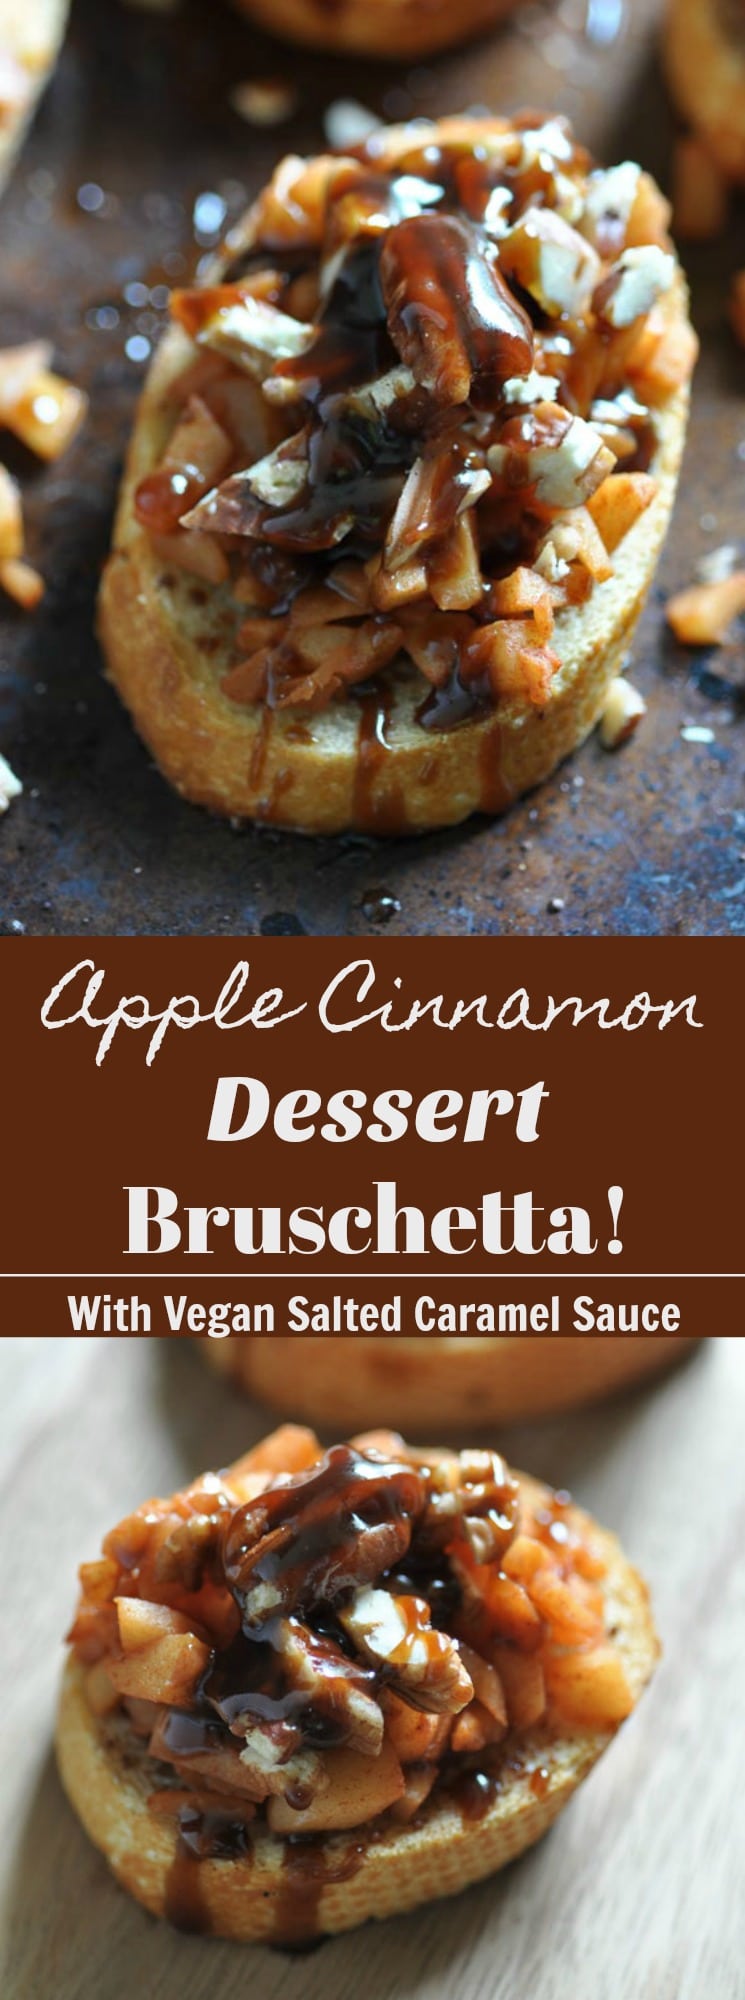 Vegan Apple Cinnamon Dessert Bruschetta with Salted Caramel Sauce!